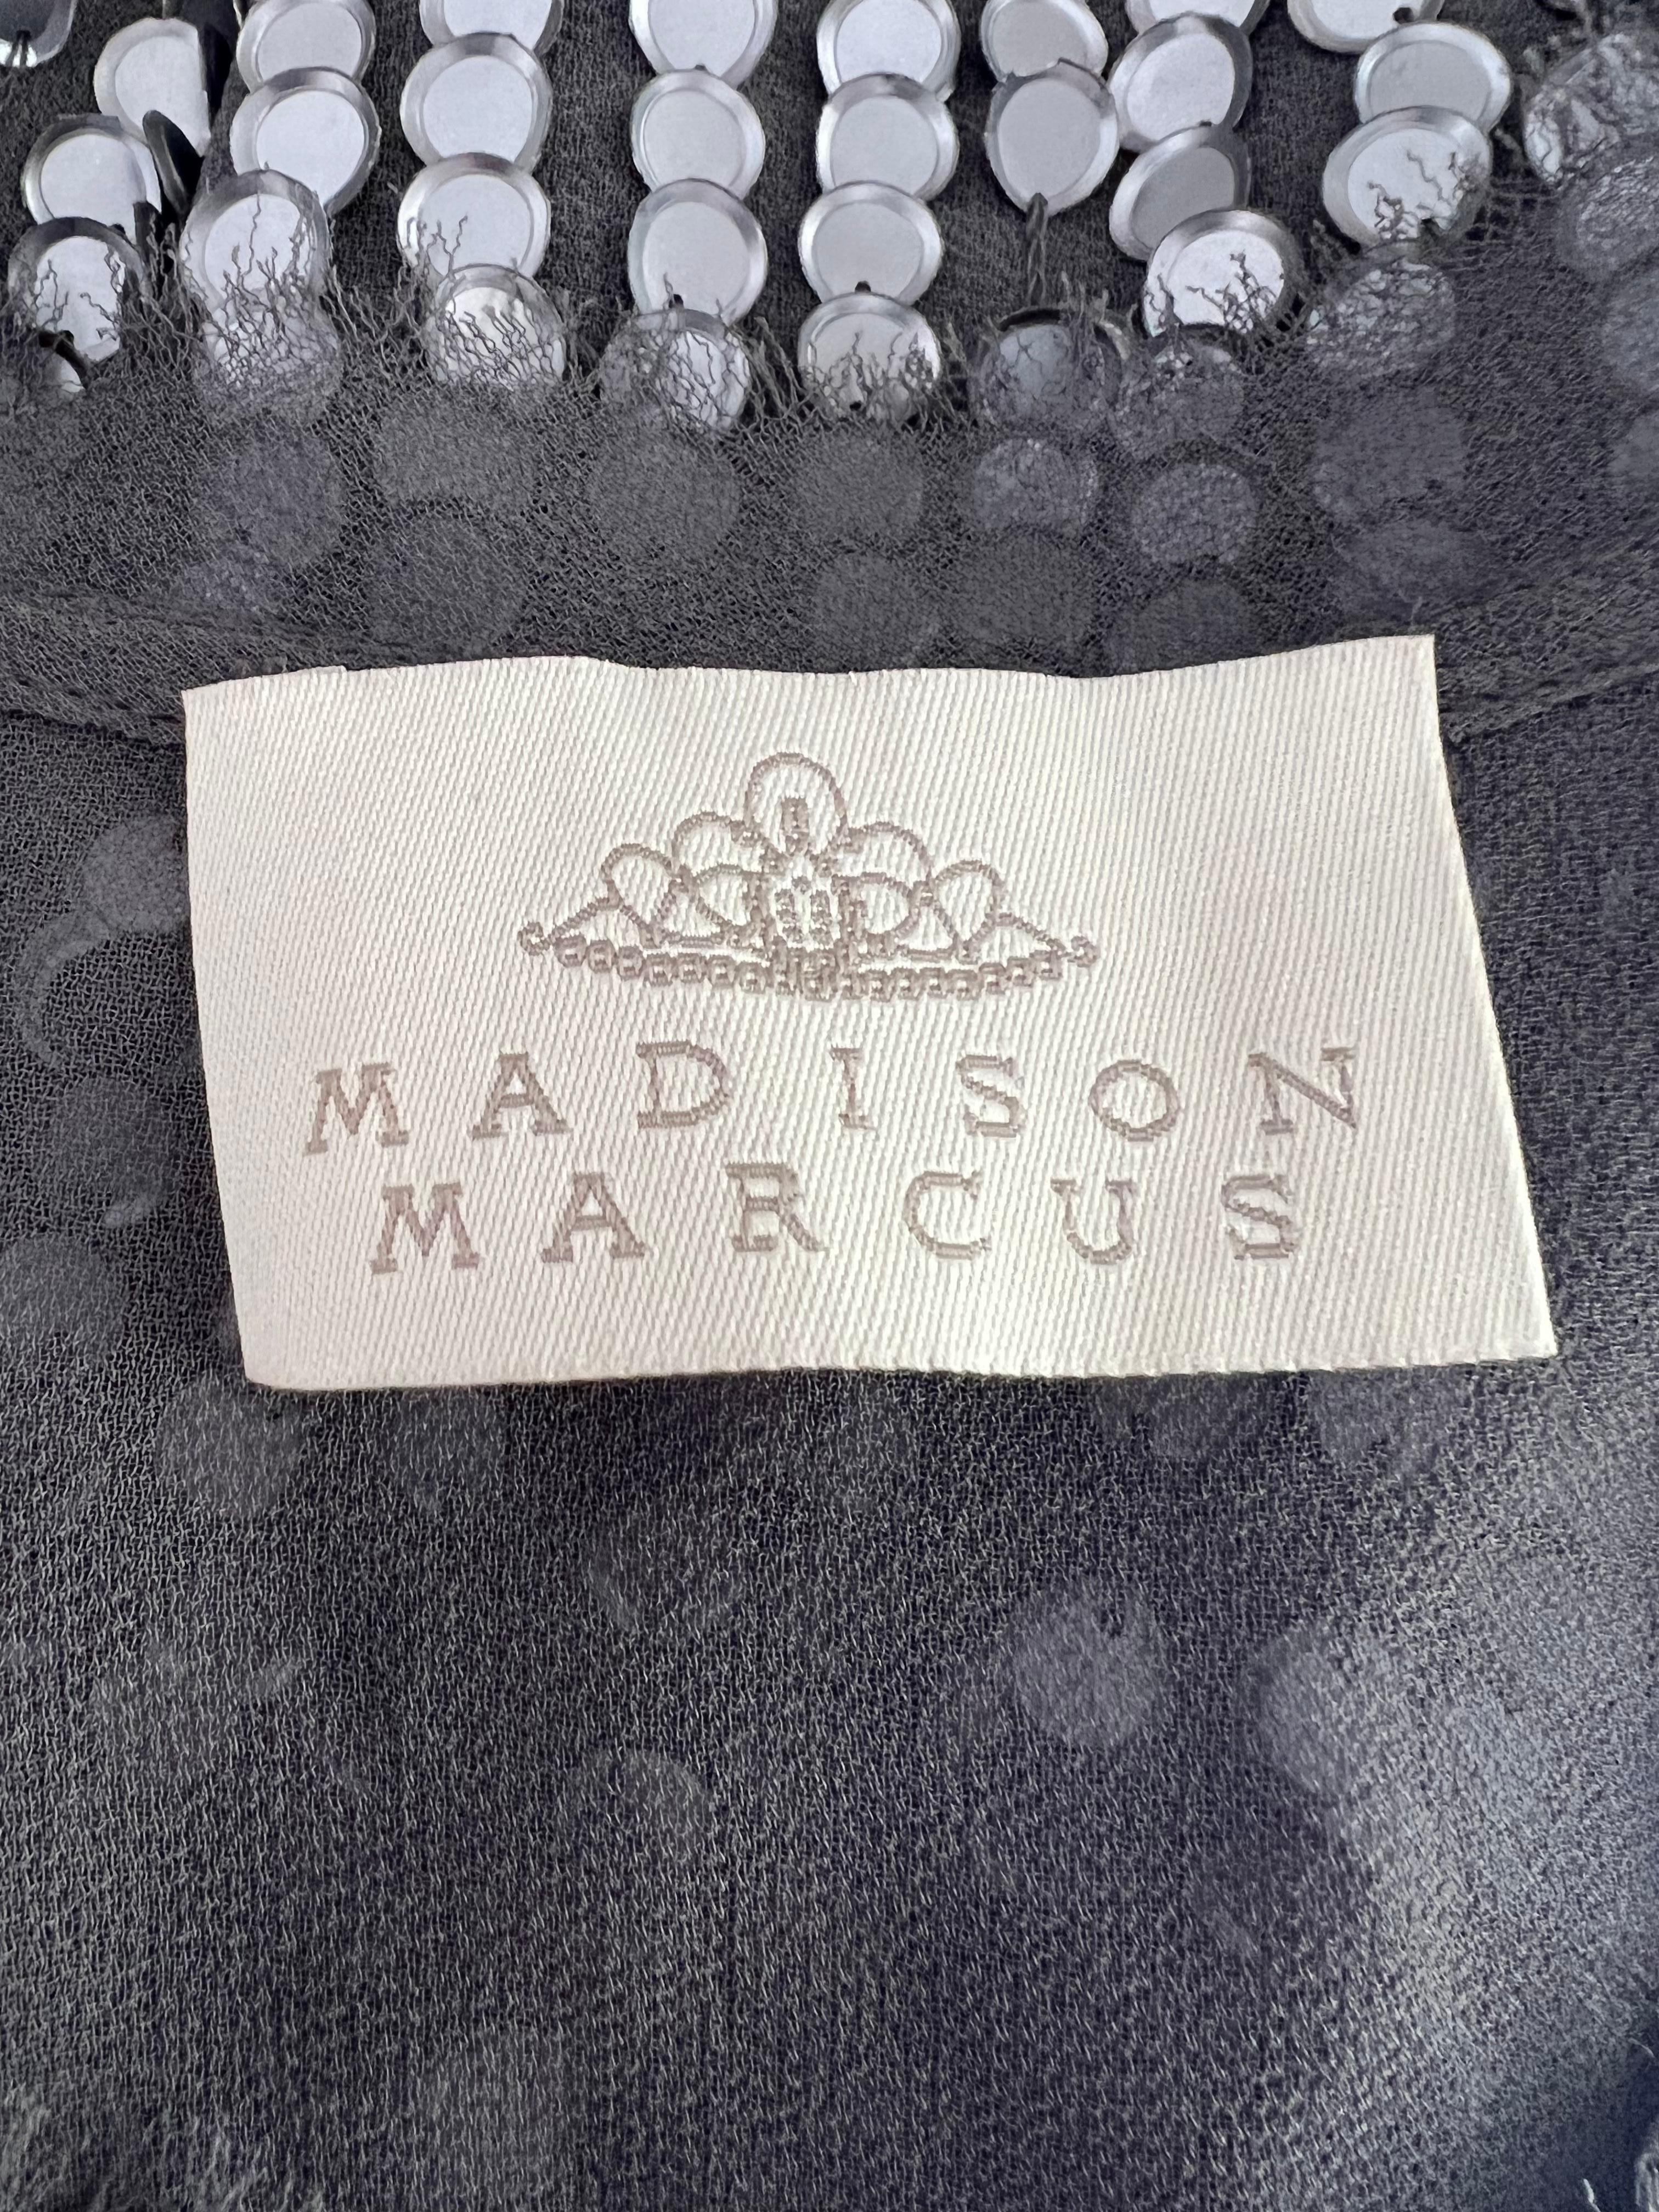 Women's Madison Marcus Grey Sequin Mini Dress For Sale